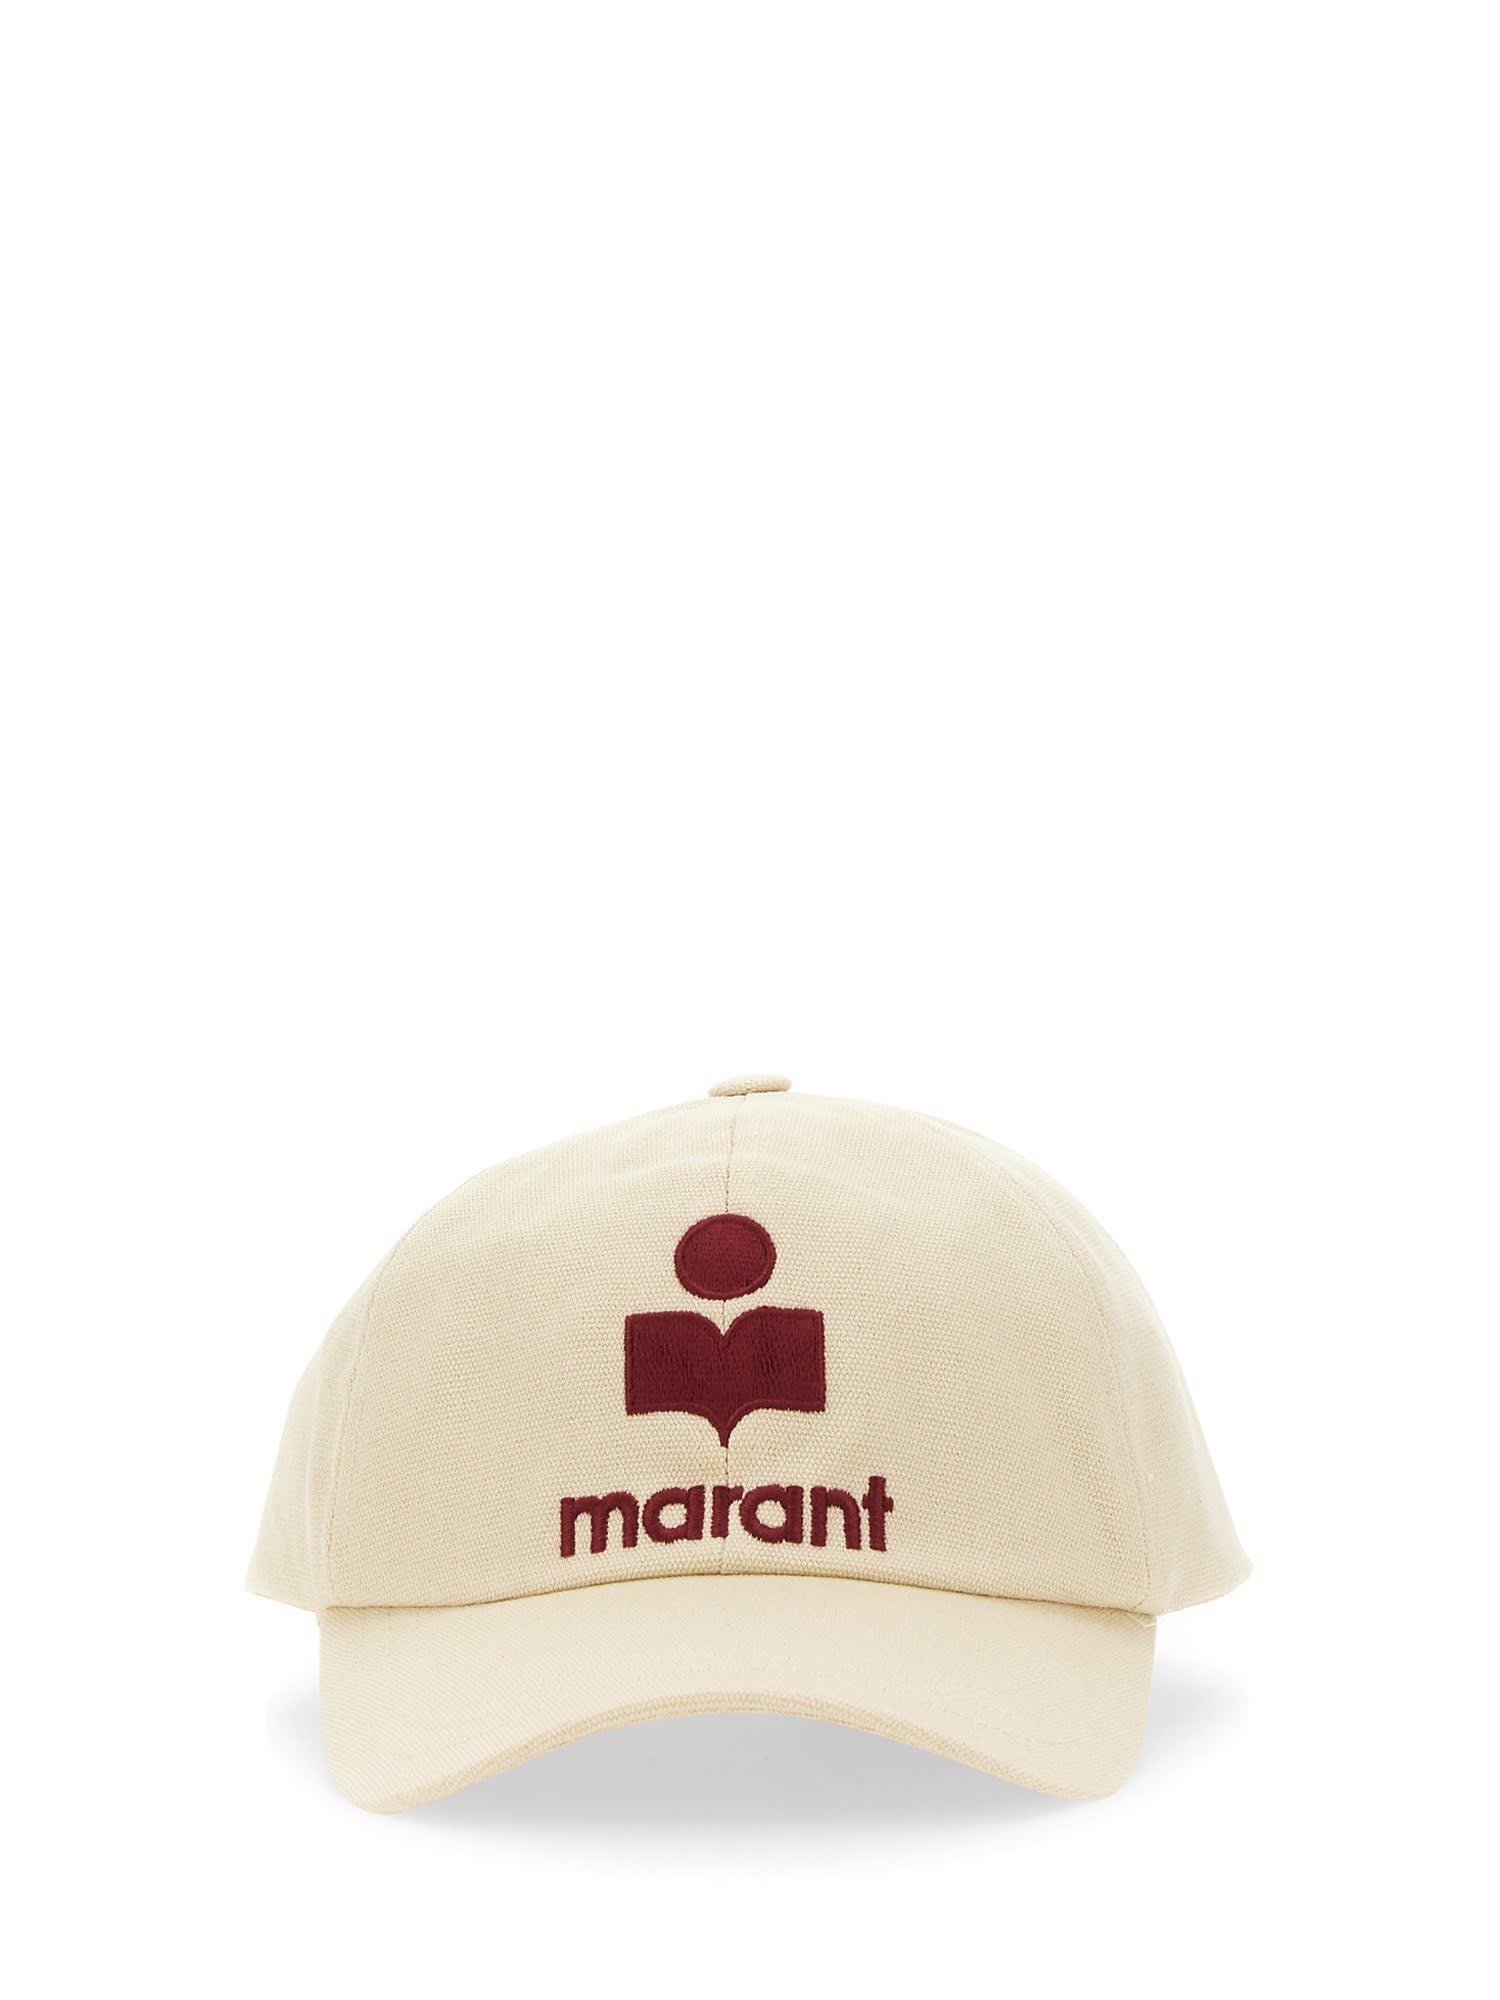 ISABEL MARANT BASEBALL CAP